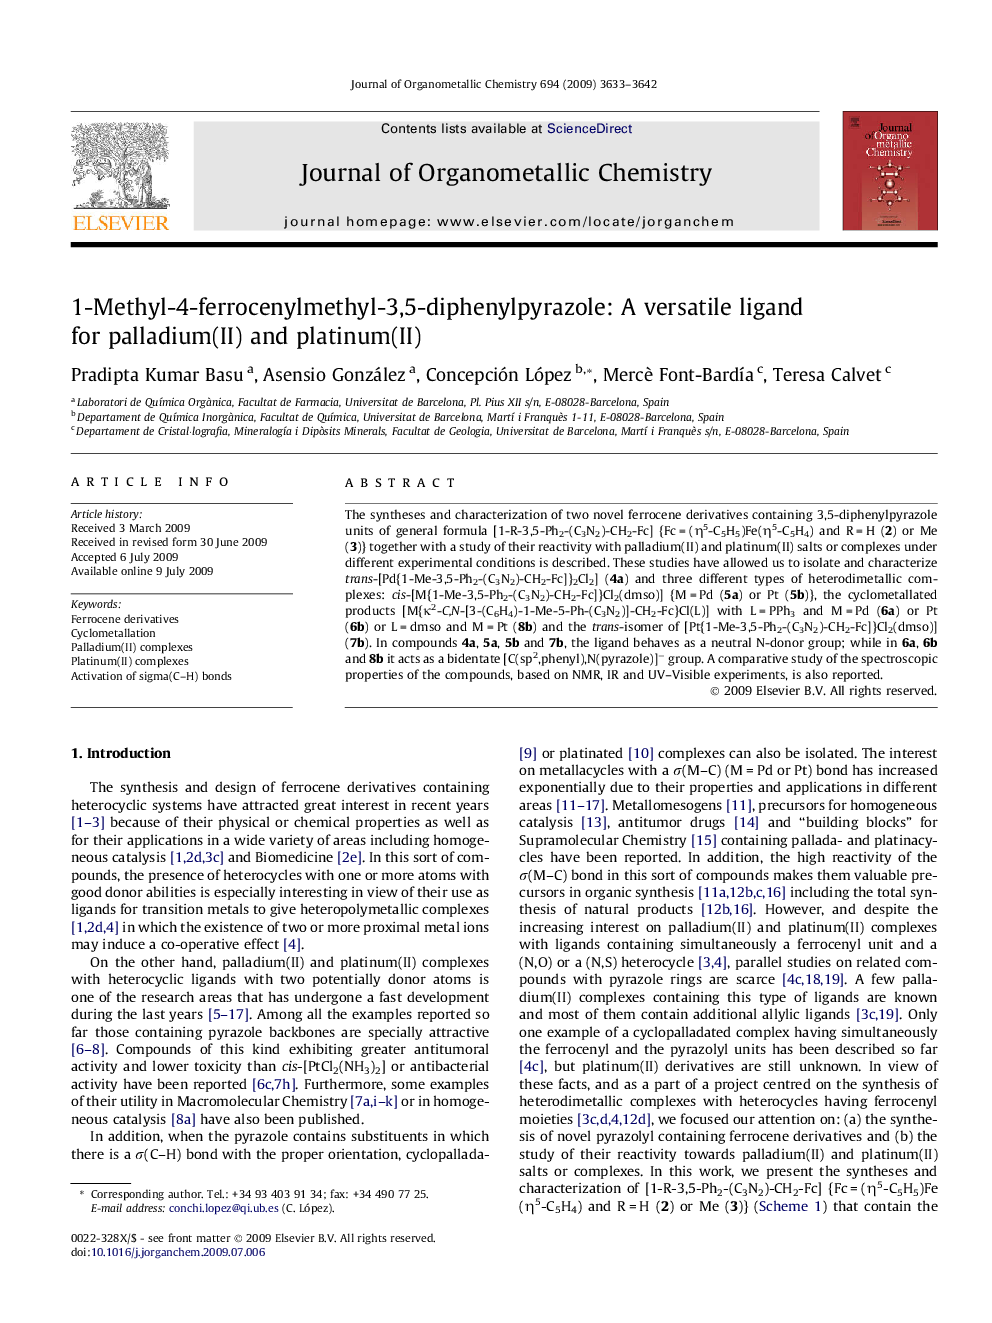 1-Methyl-4-ferrocenylmethyl-3,5-diphenylpyrazole: A versatile ligand for palladium(II) and platinum(II)